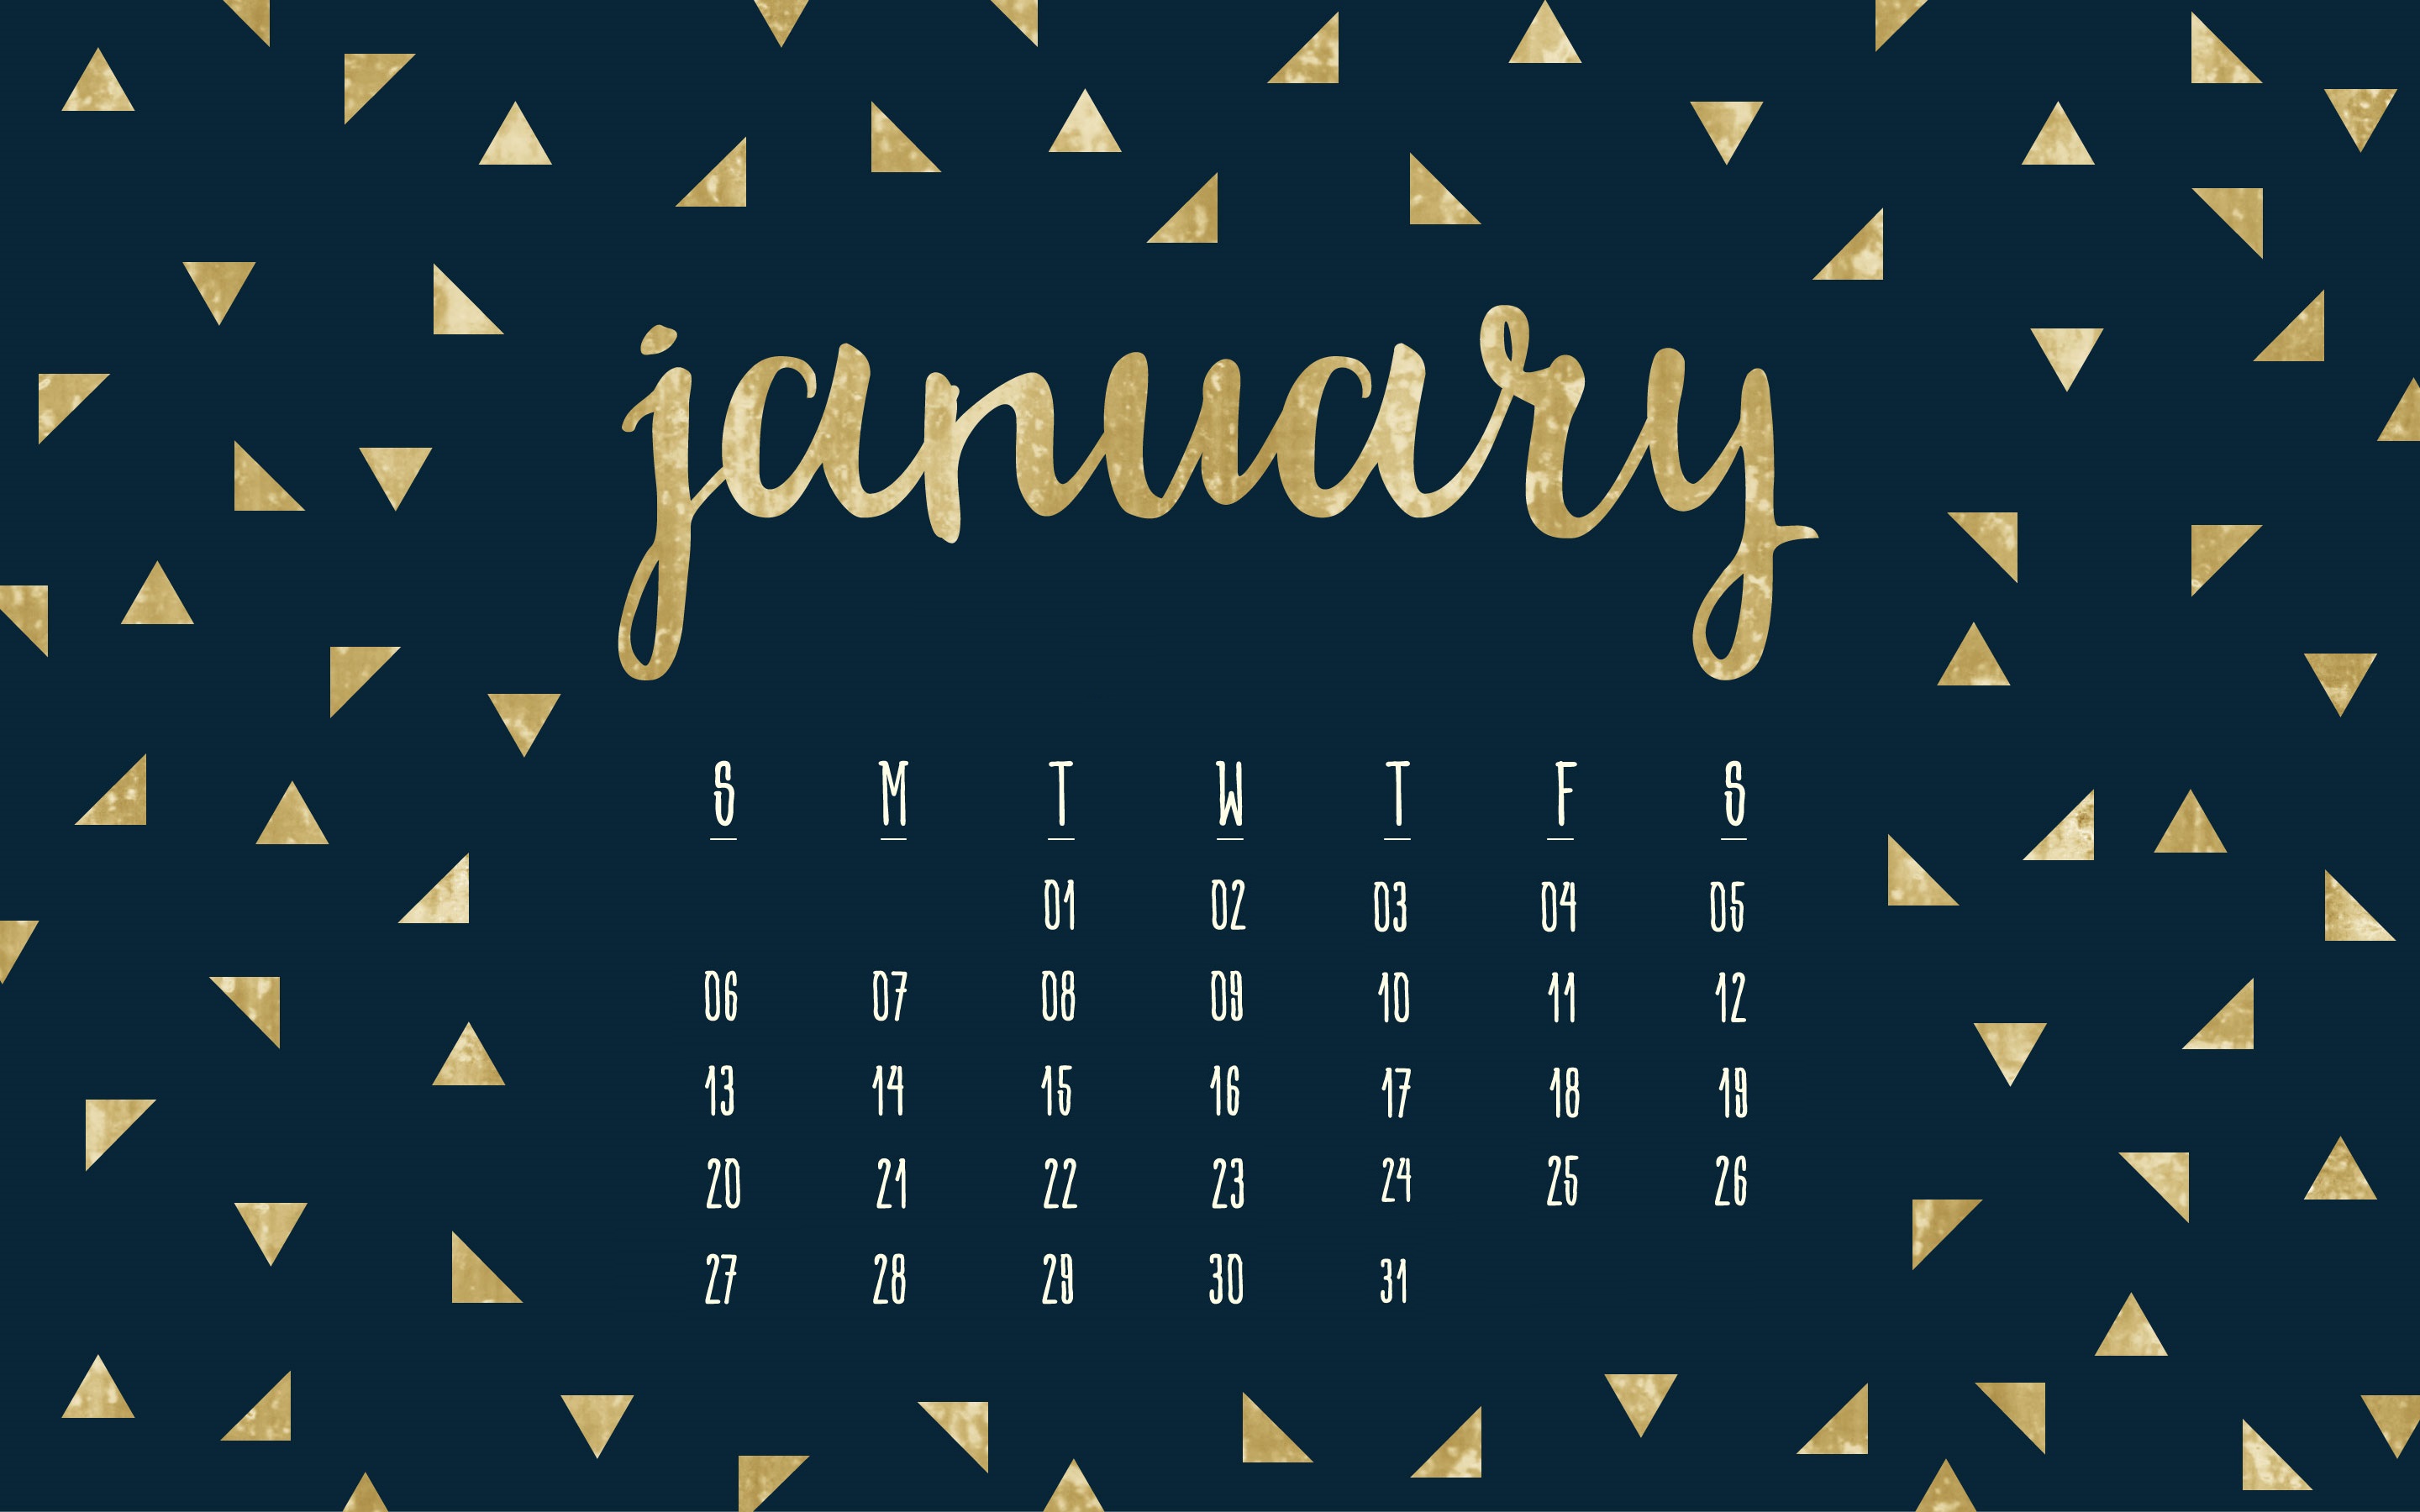 January 2019 HD Calendar Wallpapers Latest Calendar